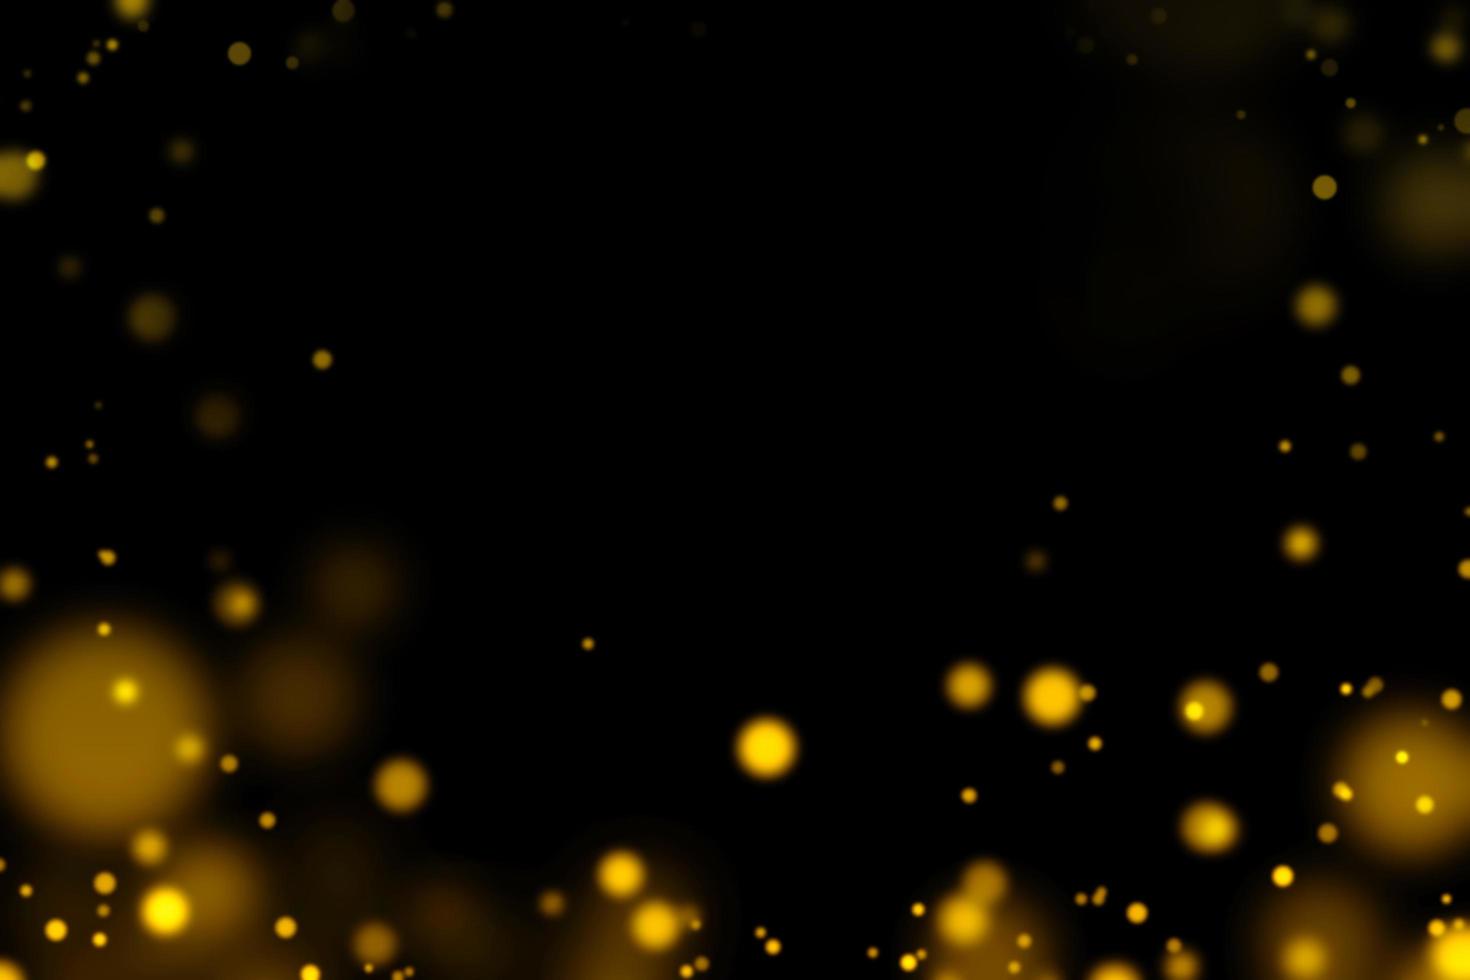 Blurred gold circles on black background photo